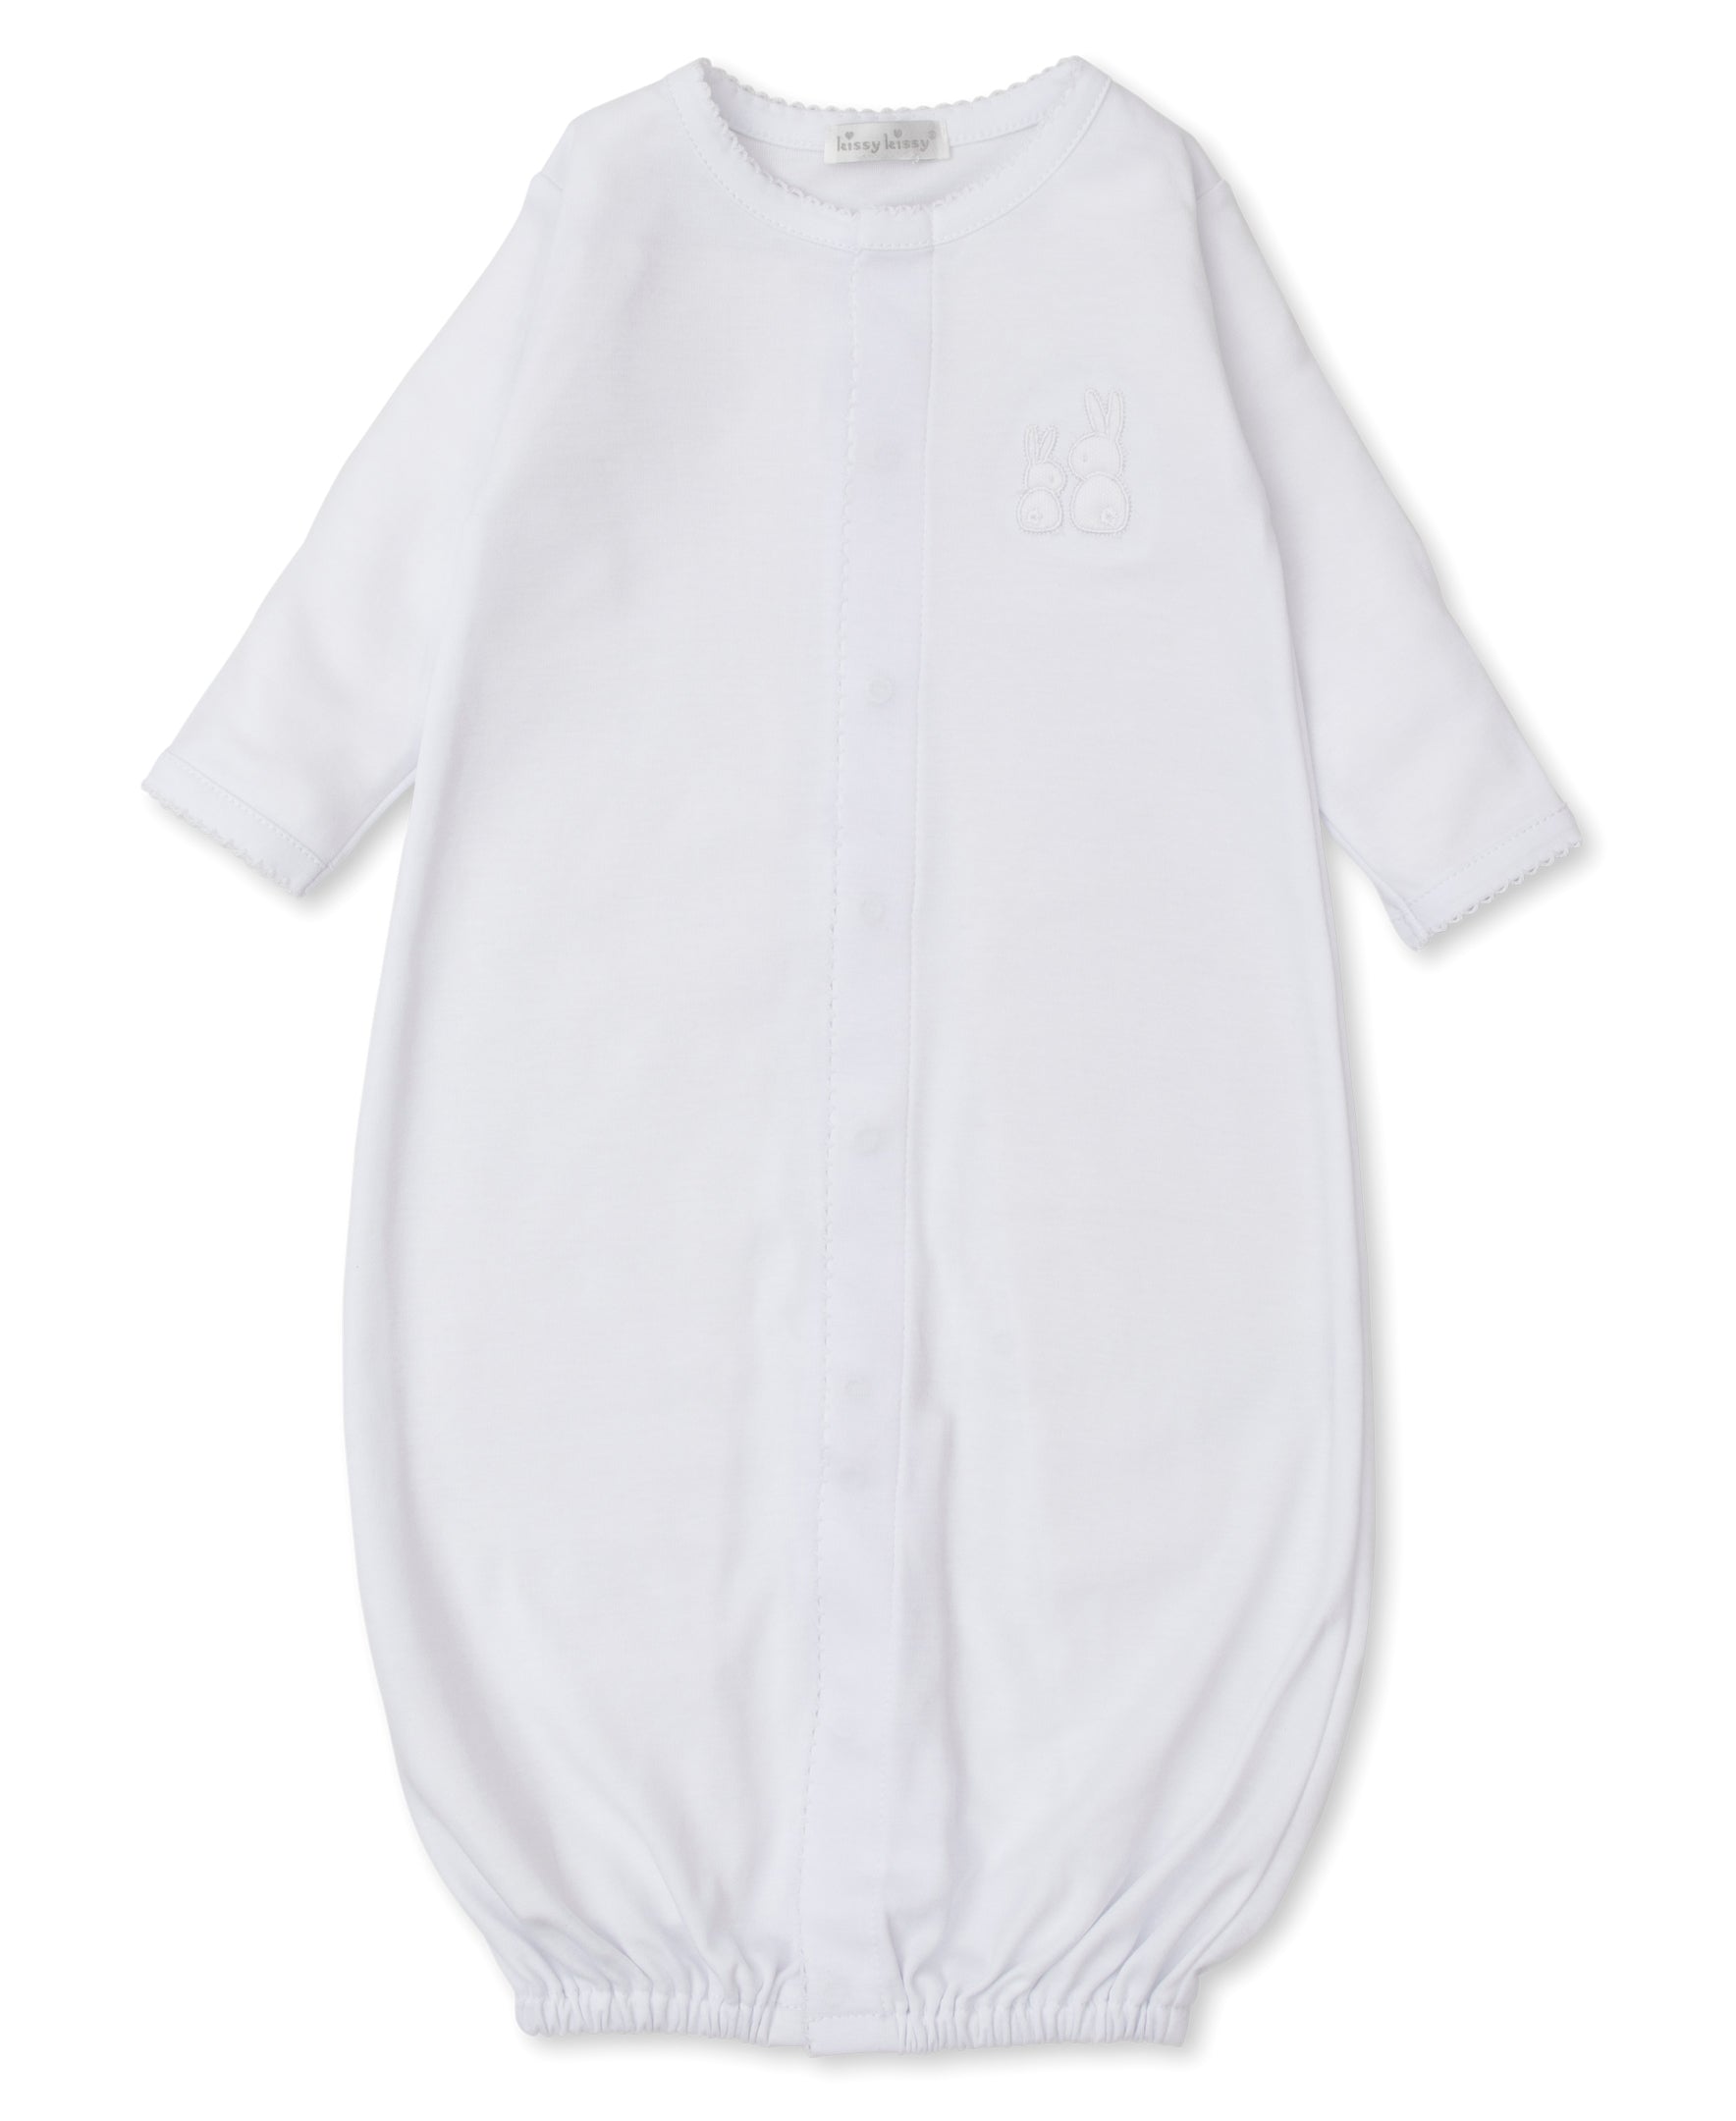 Pique Cuddle Bunnies White Convertible Gown